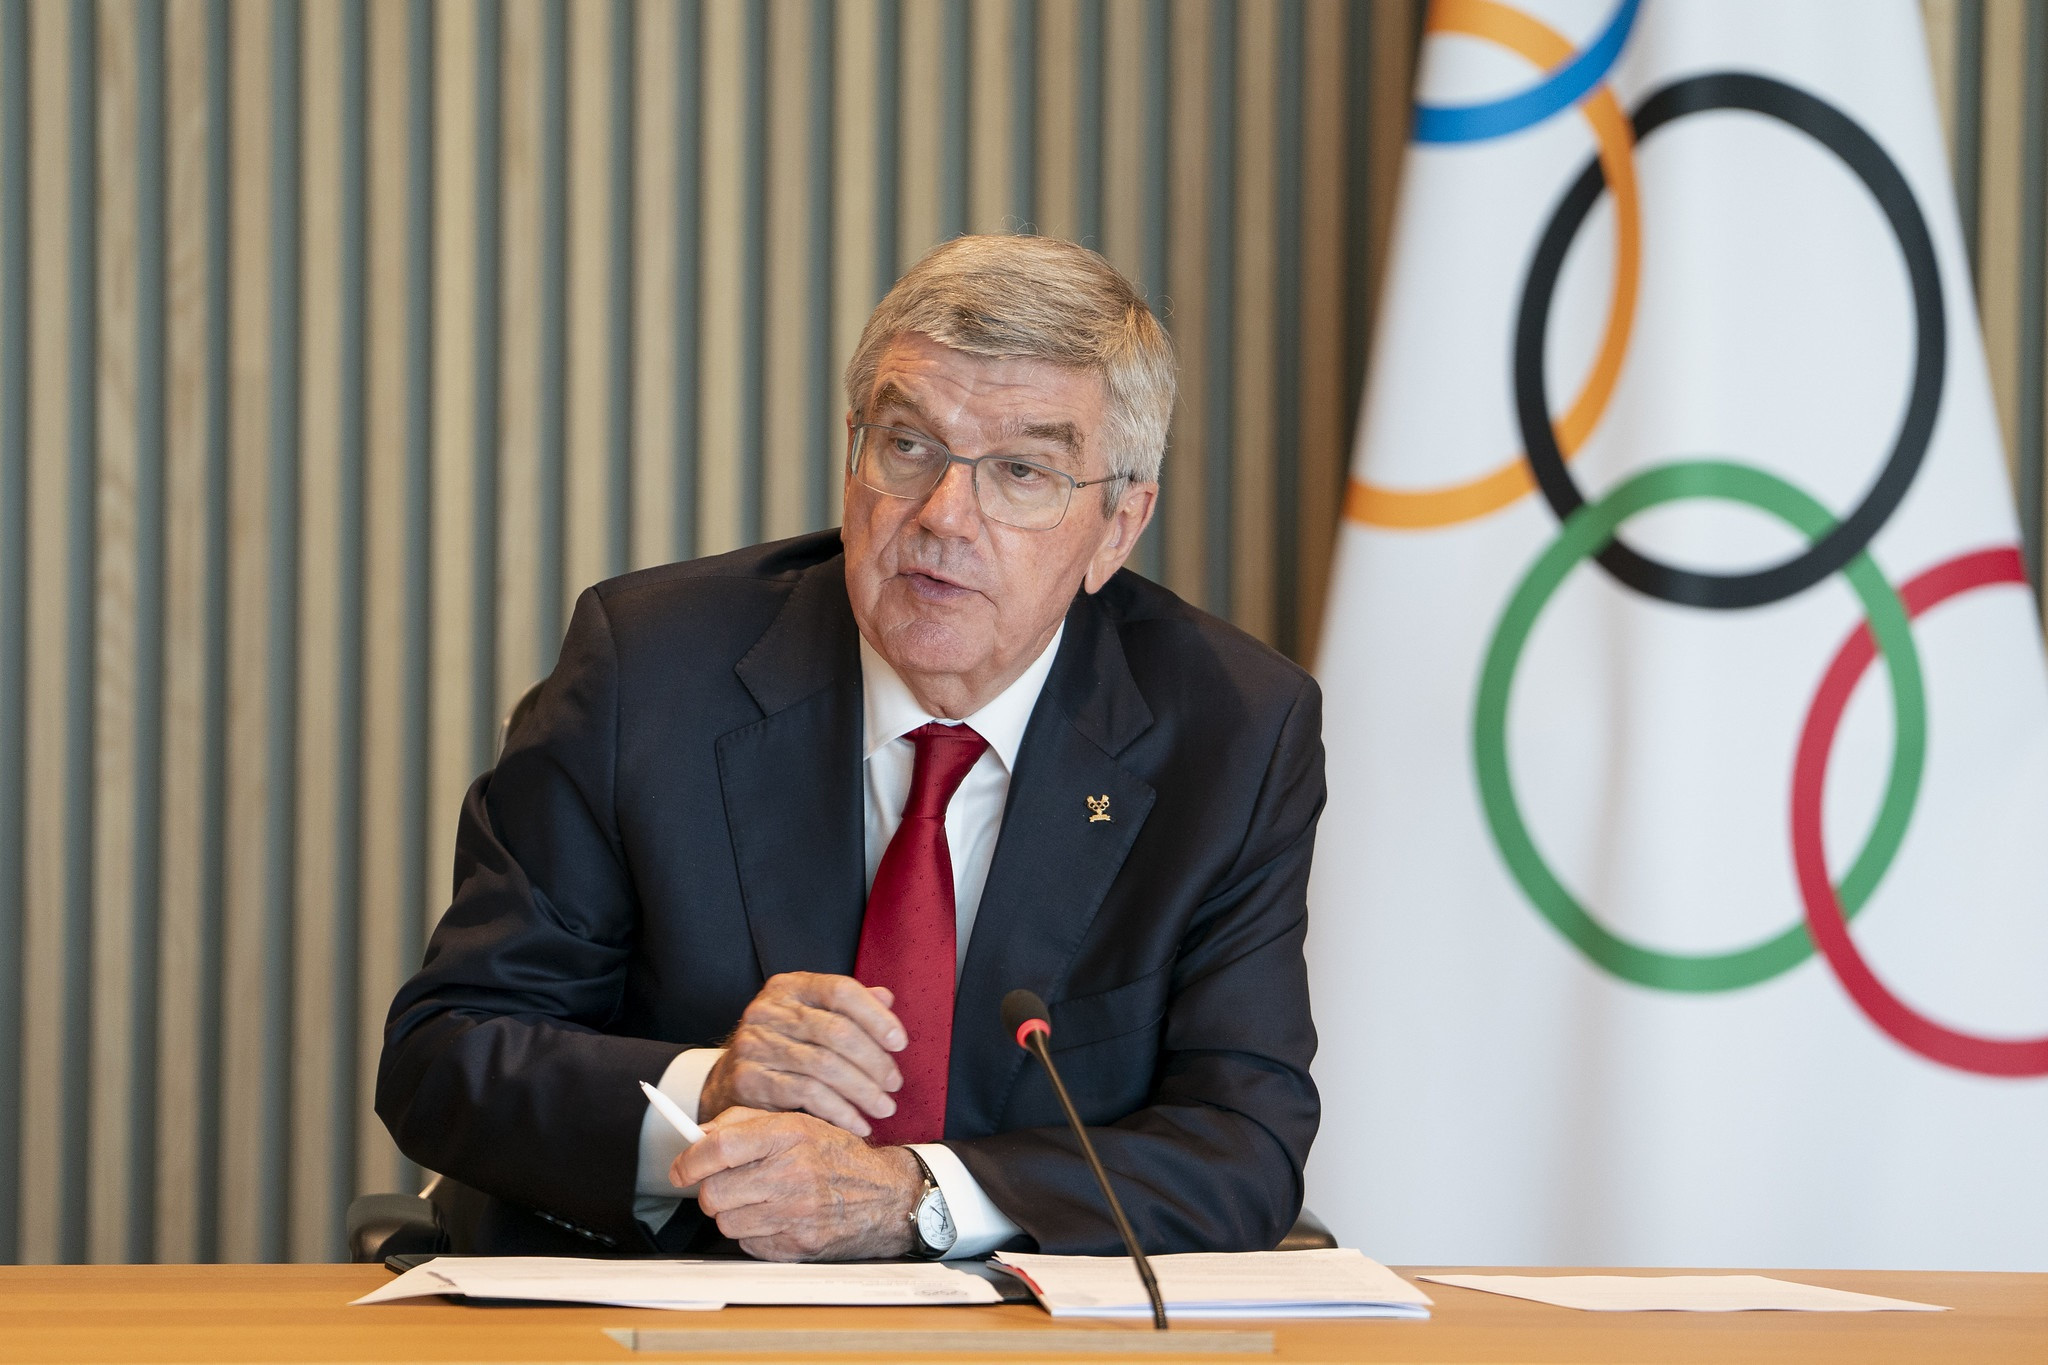 IOC President Thomas Bach has warned that World Boxing 